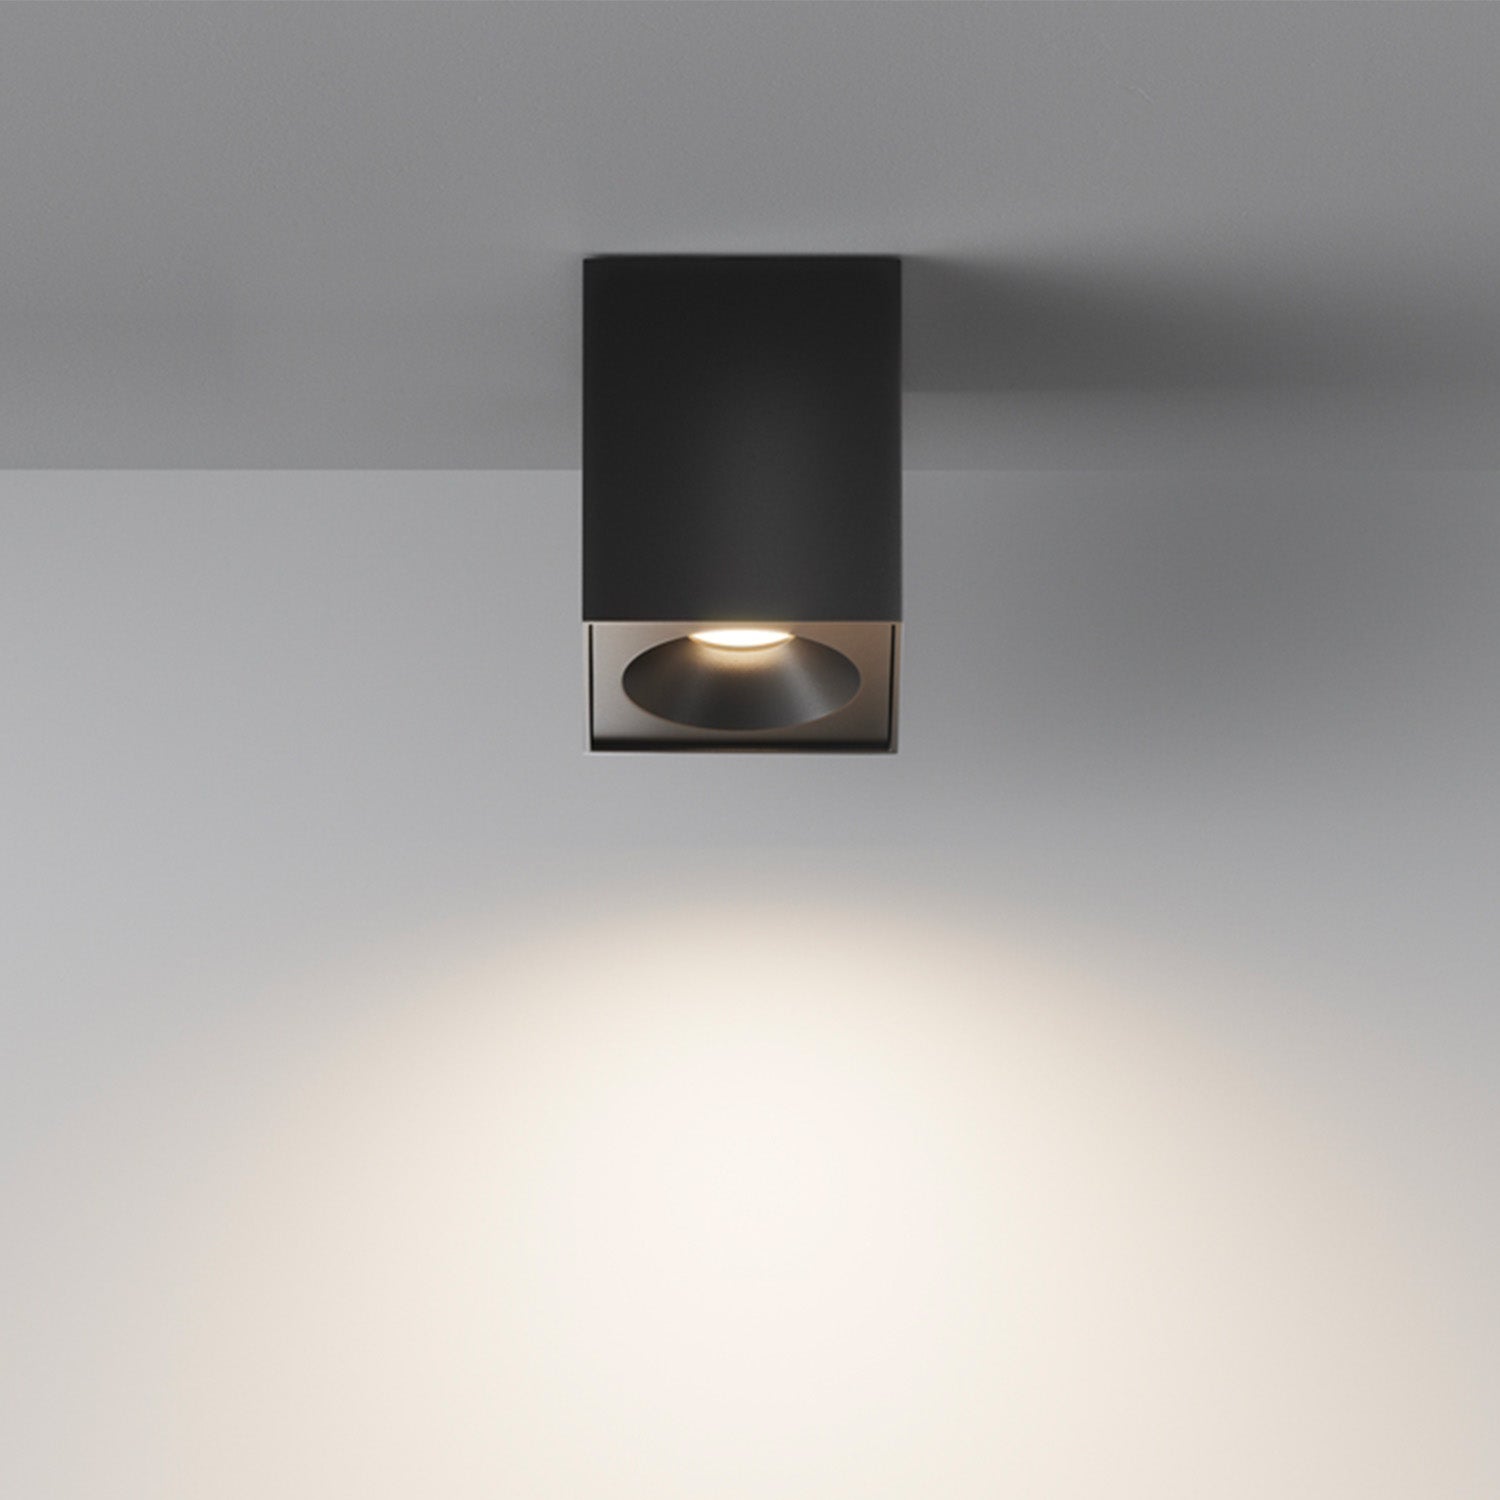 ZOOM - Black or white surface-mounted spotlight in IP65 waterproof aluminum